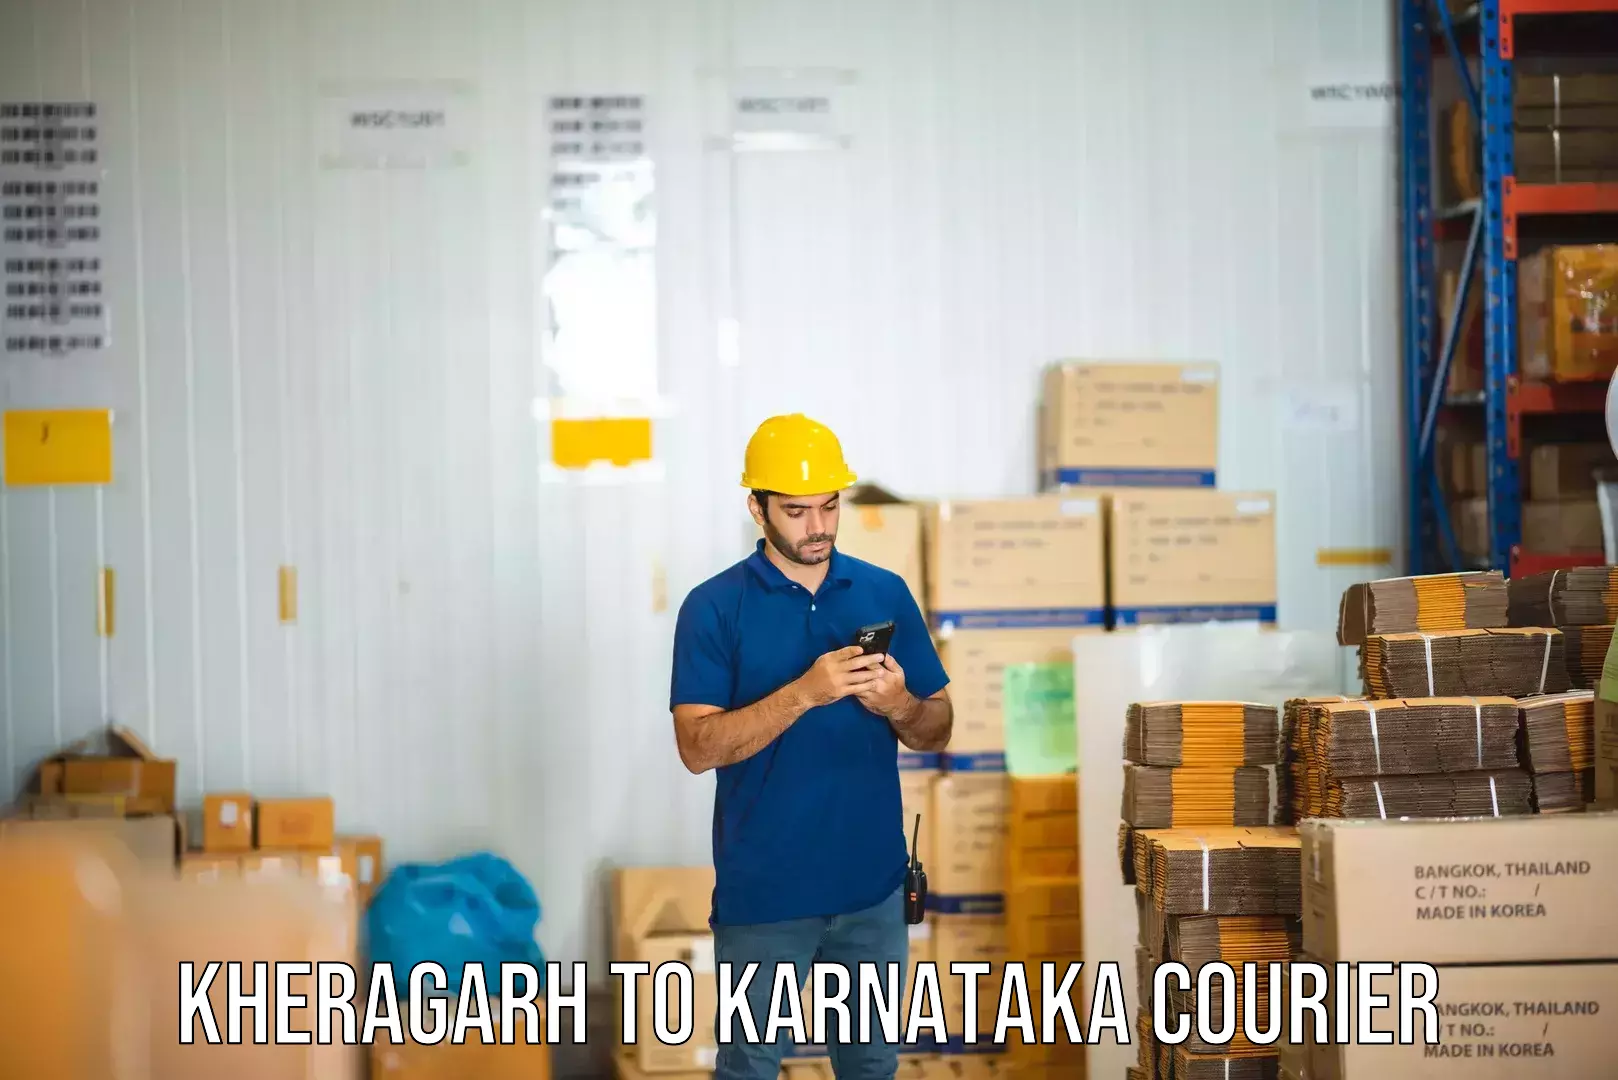 Courier service innovation Kheragarh to Karnataka